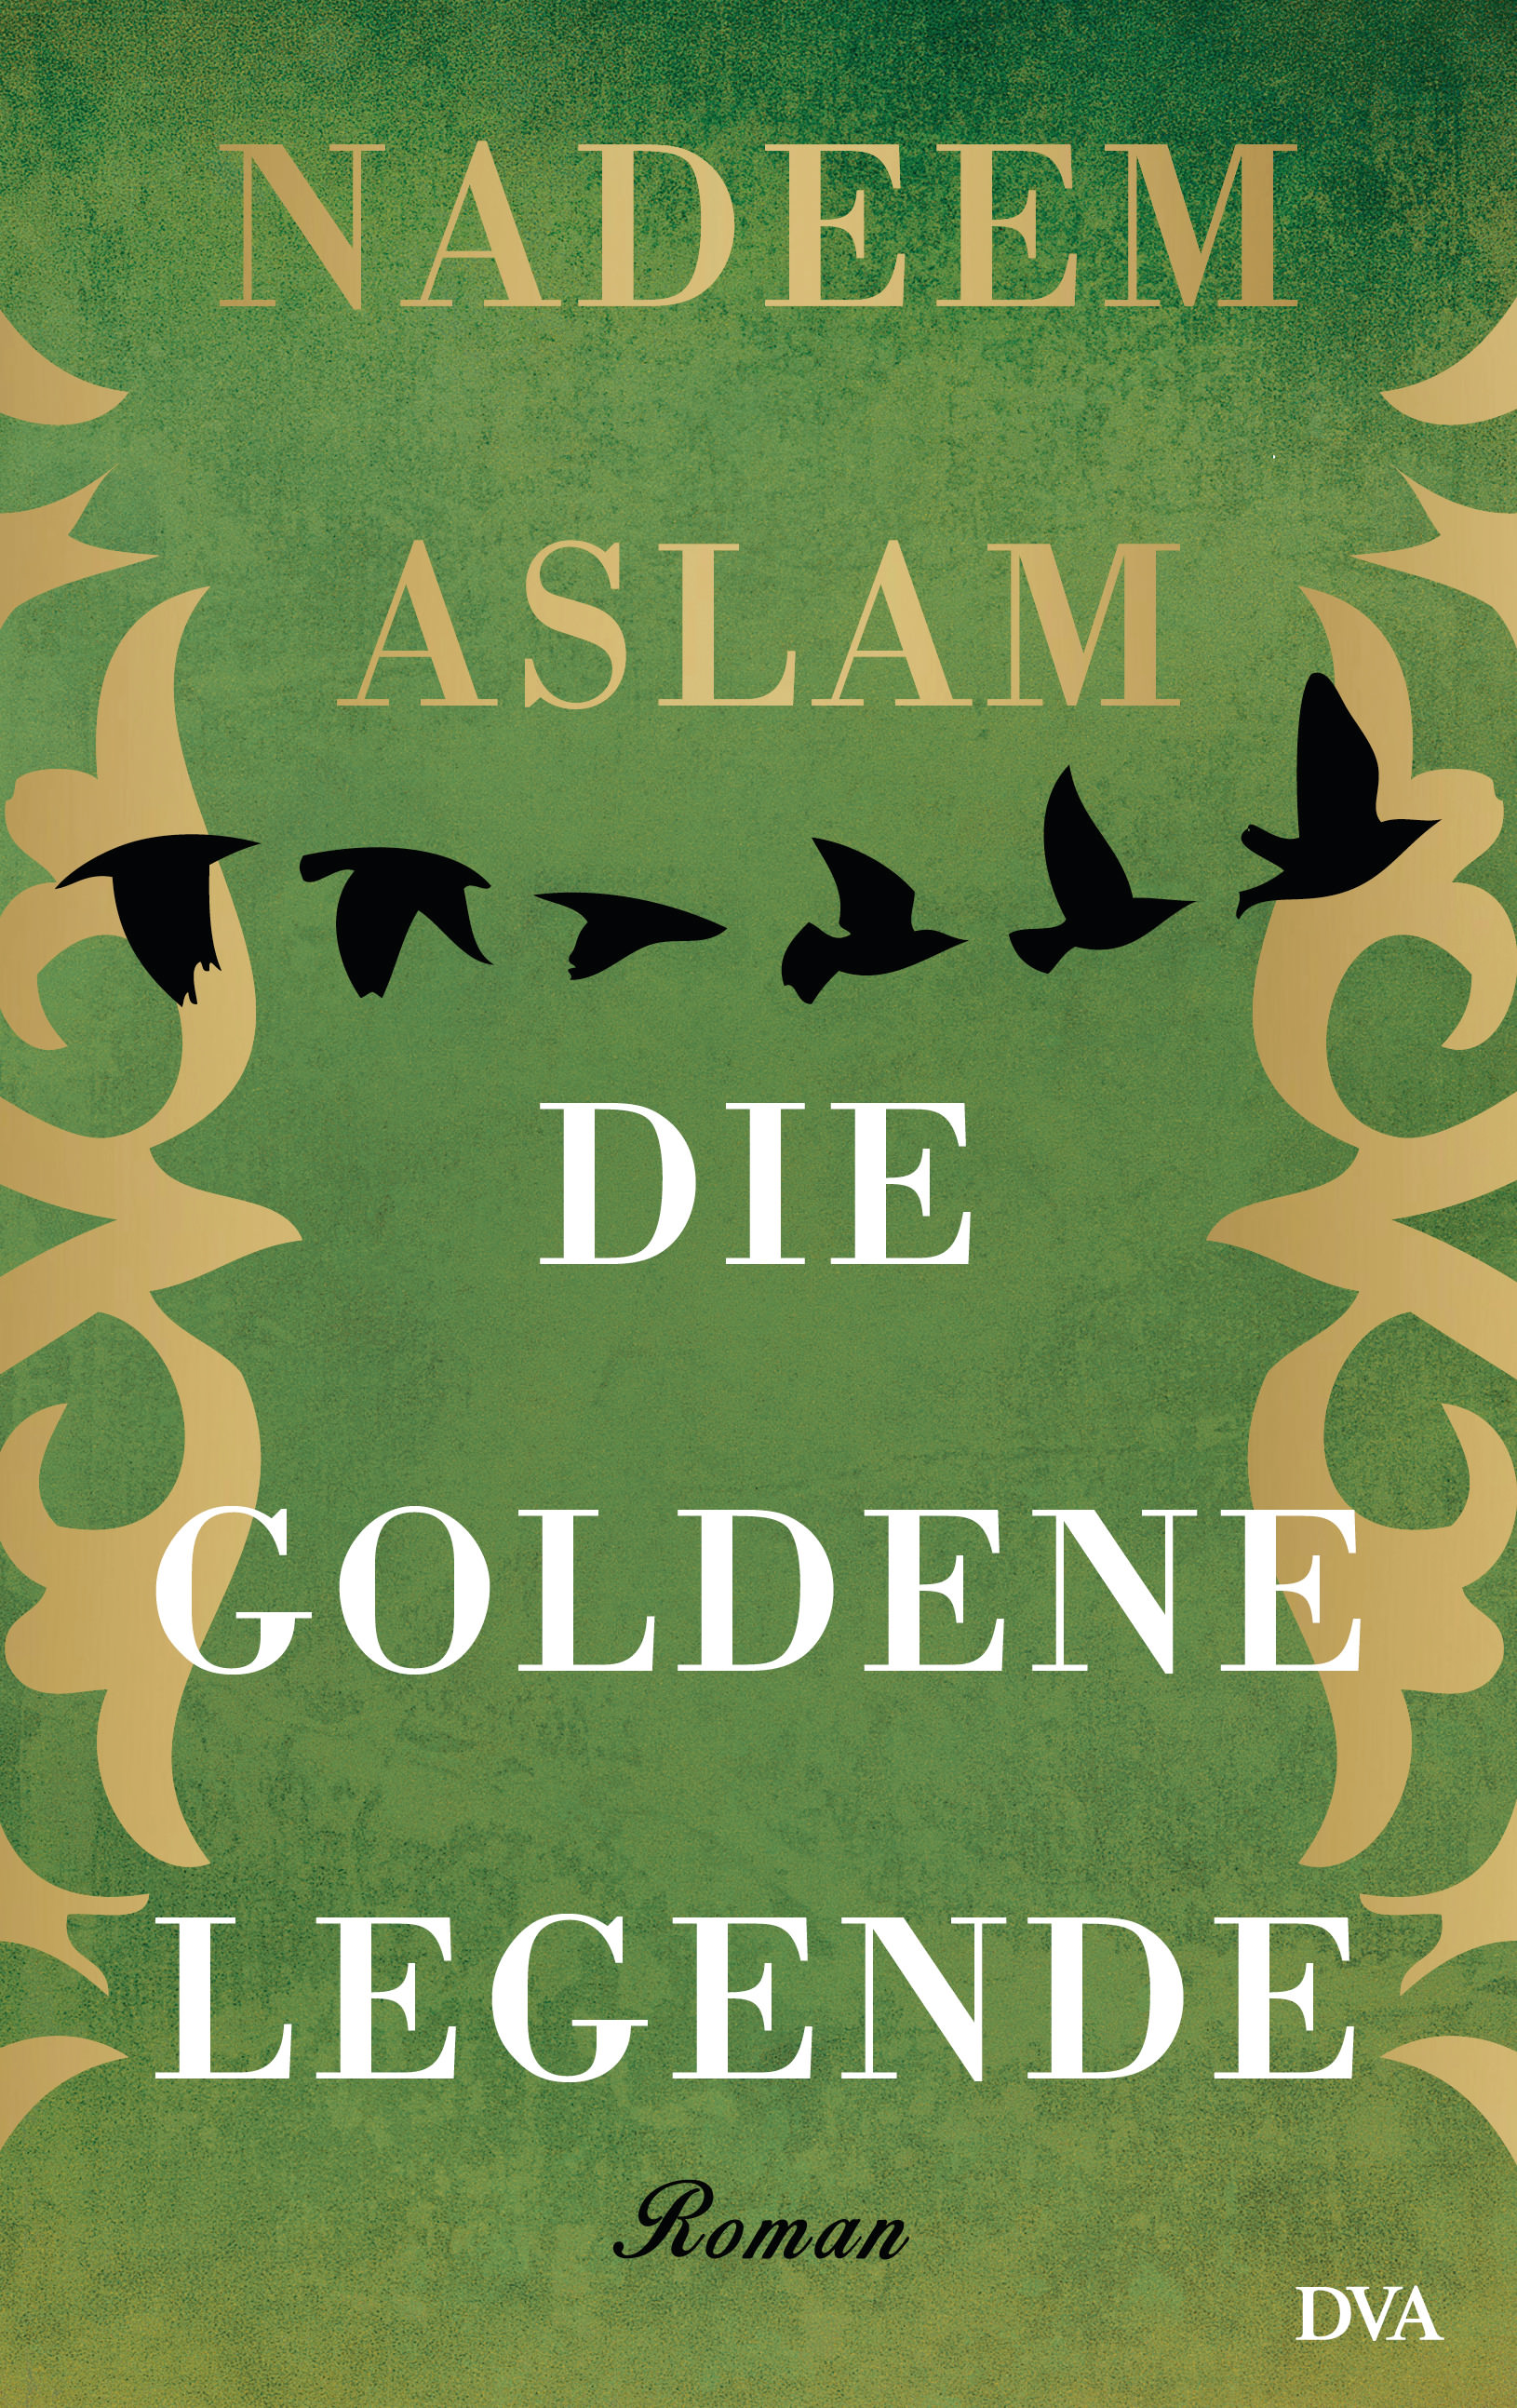 Buchcover: Nadeem Aslam: Die goldene Legende. DVA